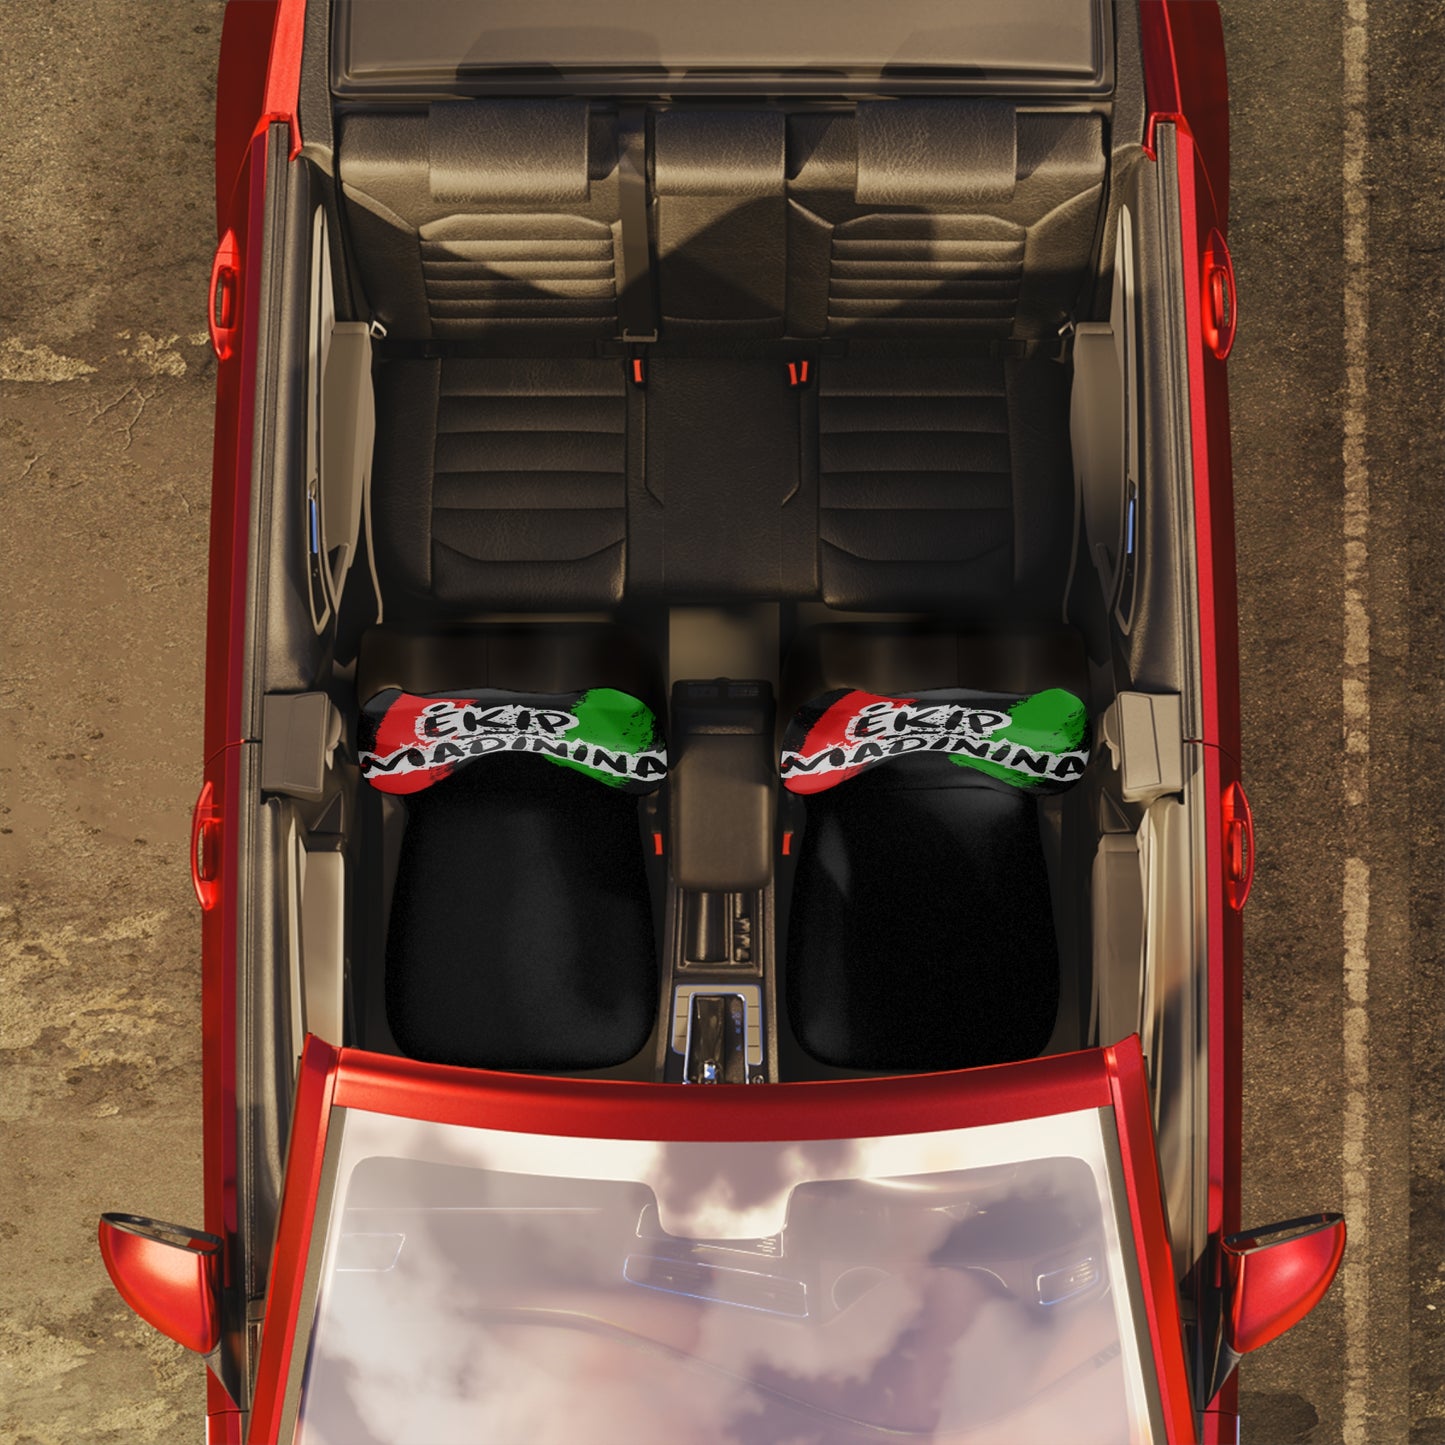 Epik Madinina Car Seat Covers